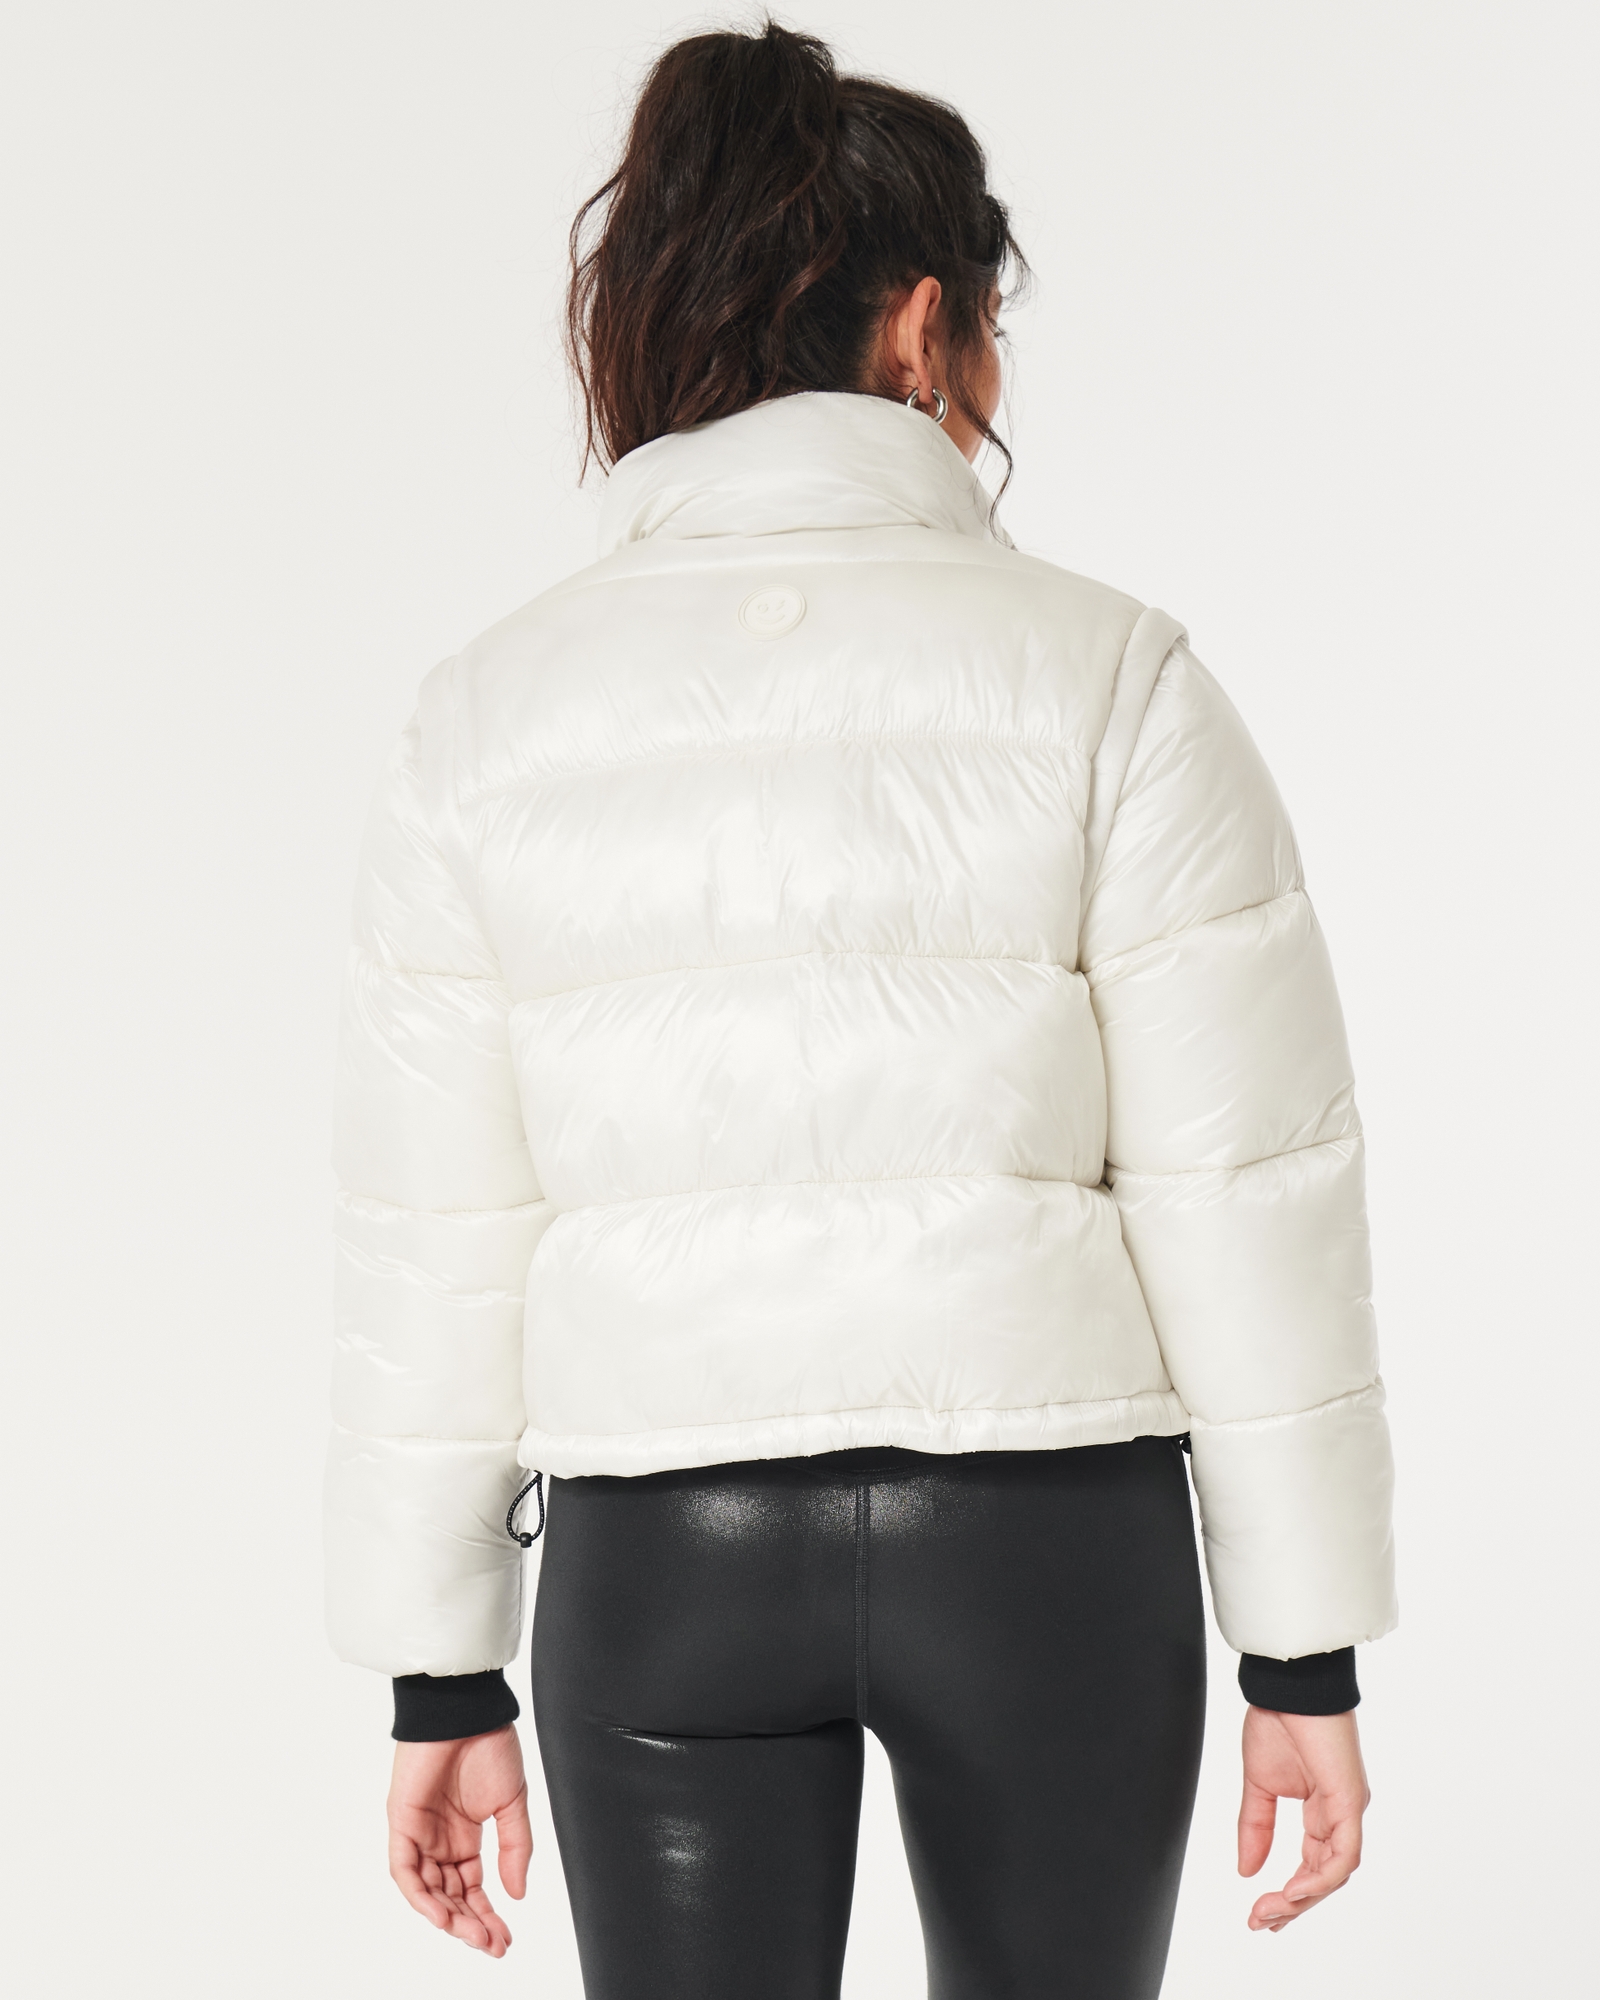 Hollister Corduroy White Puffer Jacket Size M - $50 (58% Off Retail